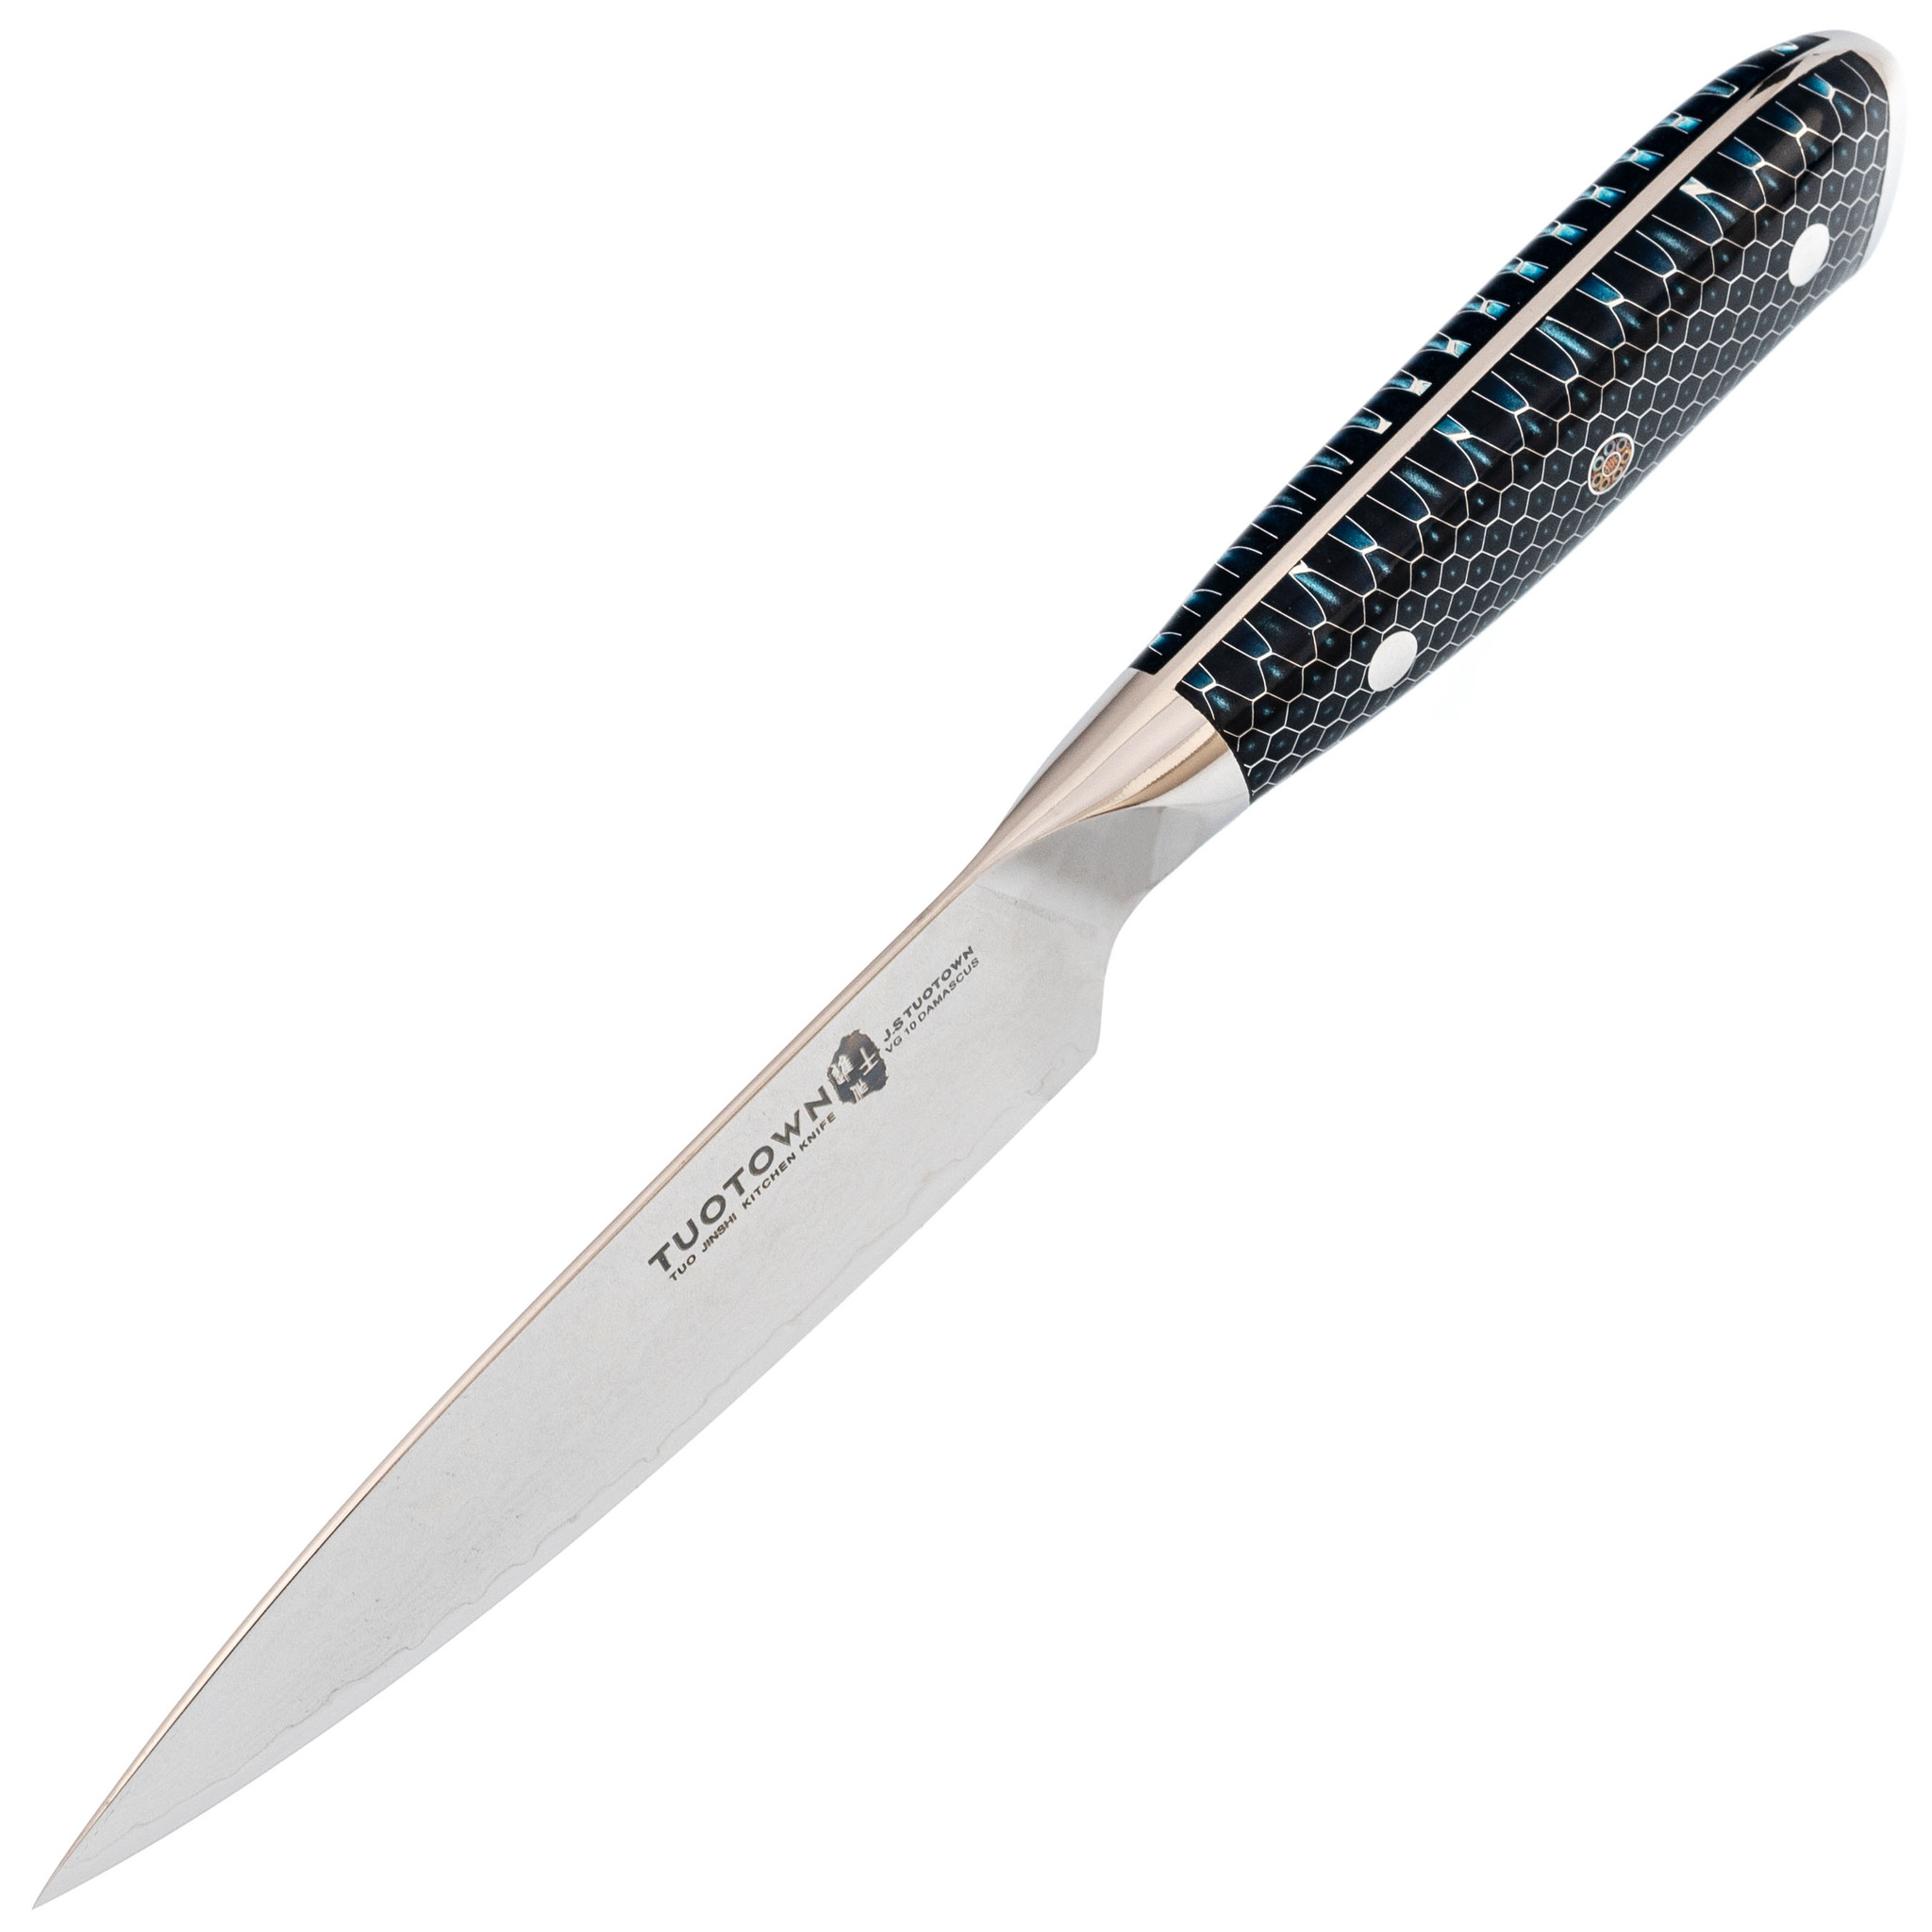 Кухонный нож Tuotown, сталь VG10, обкладка Damascus, рукоять акрил, синий - фото 2